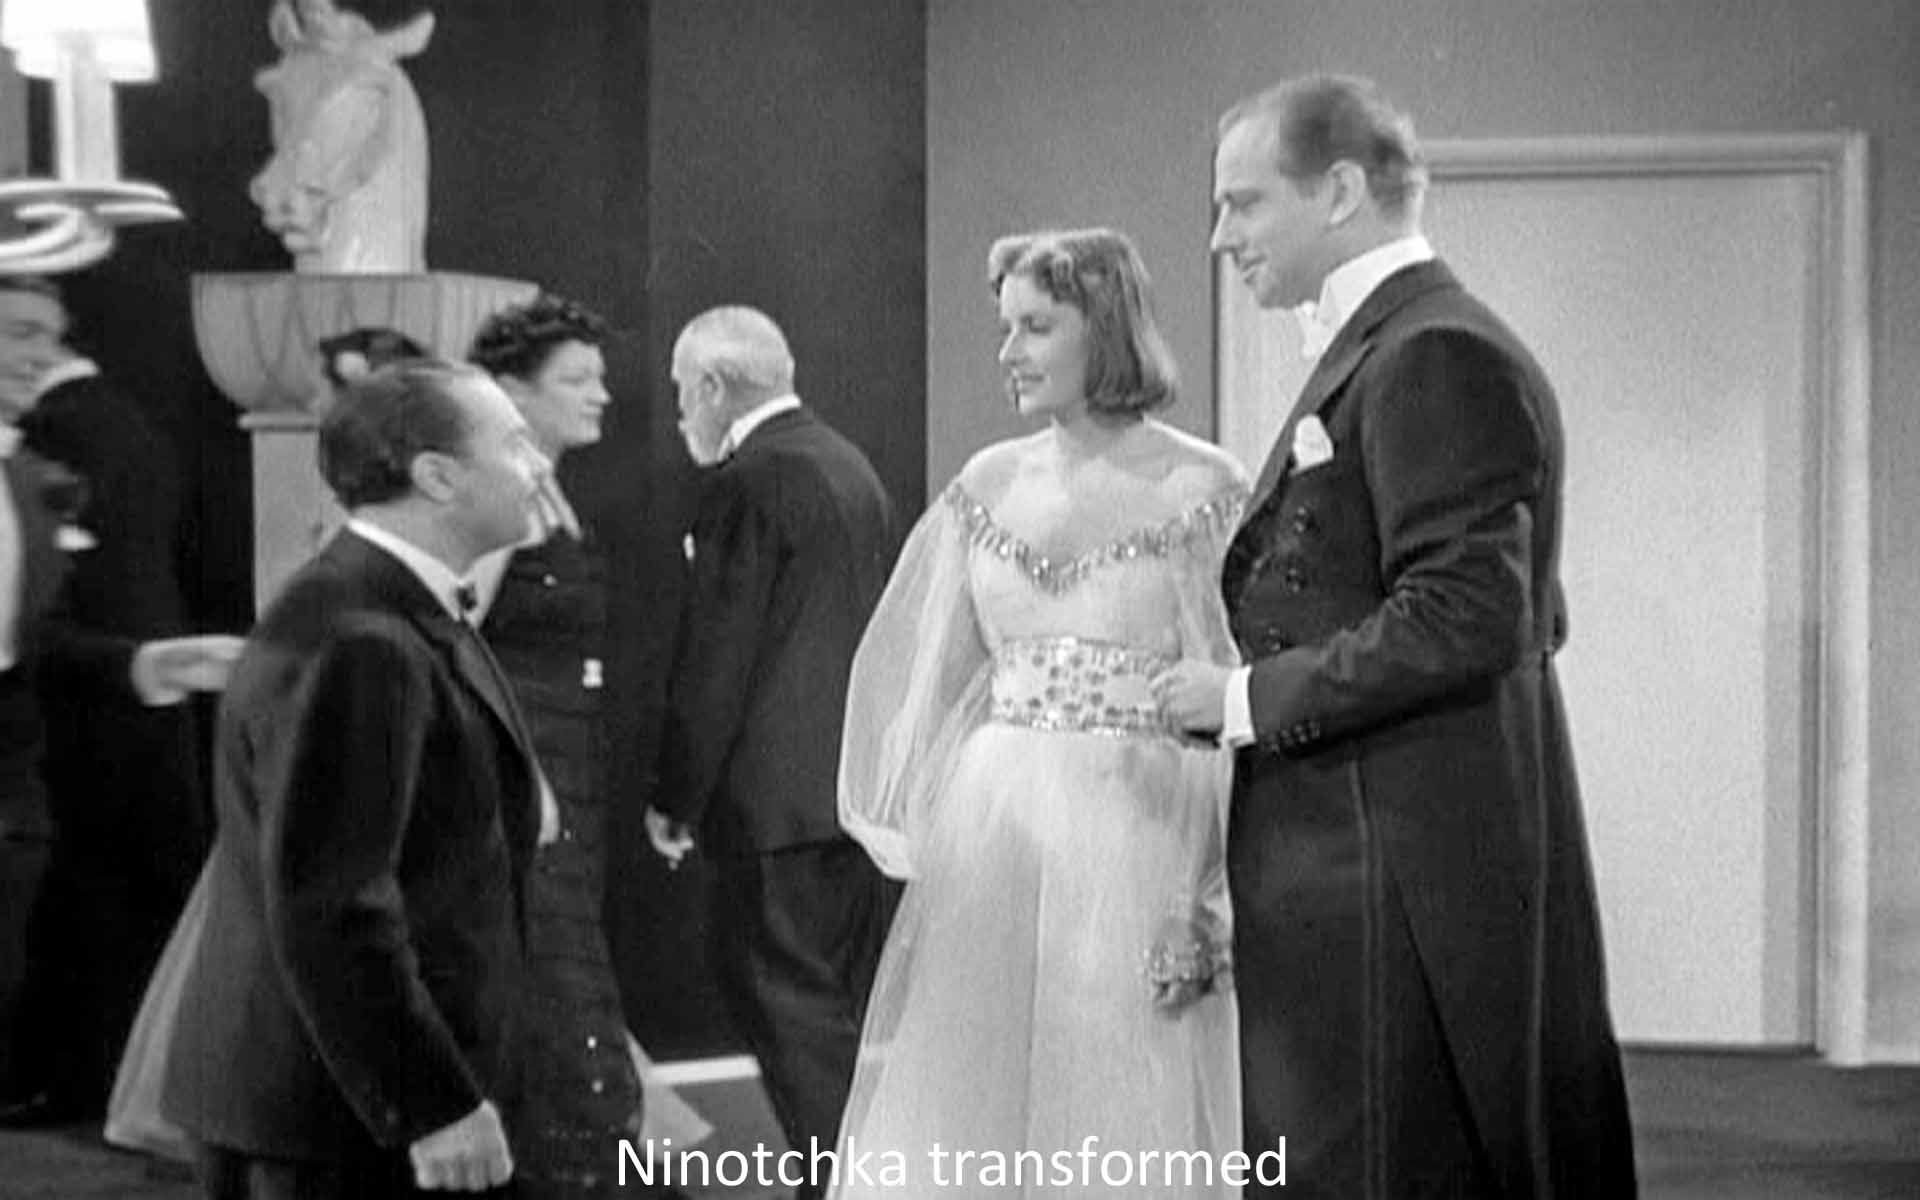 Ninotchka transformed